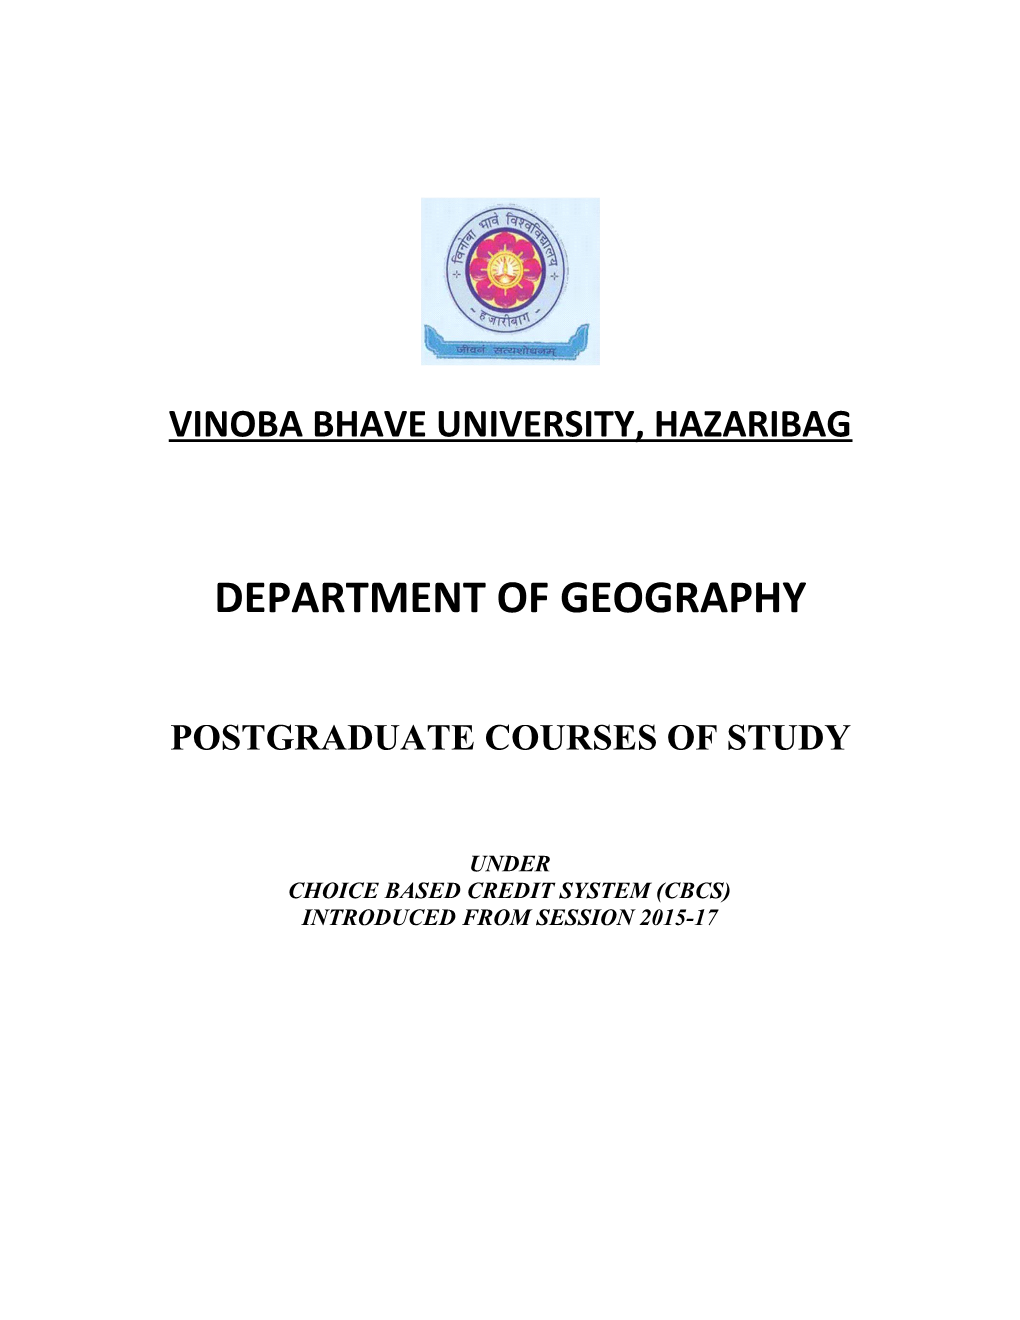 Vinoba Bhave University, Hazaribag